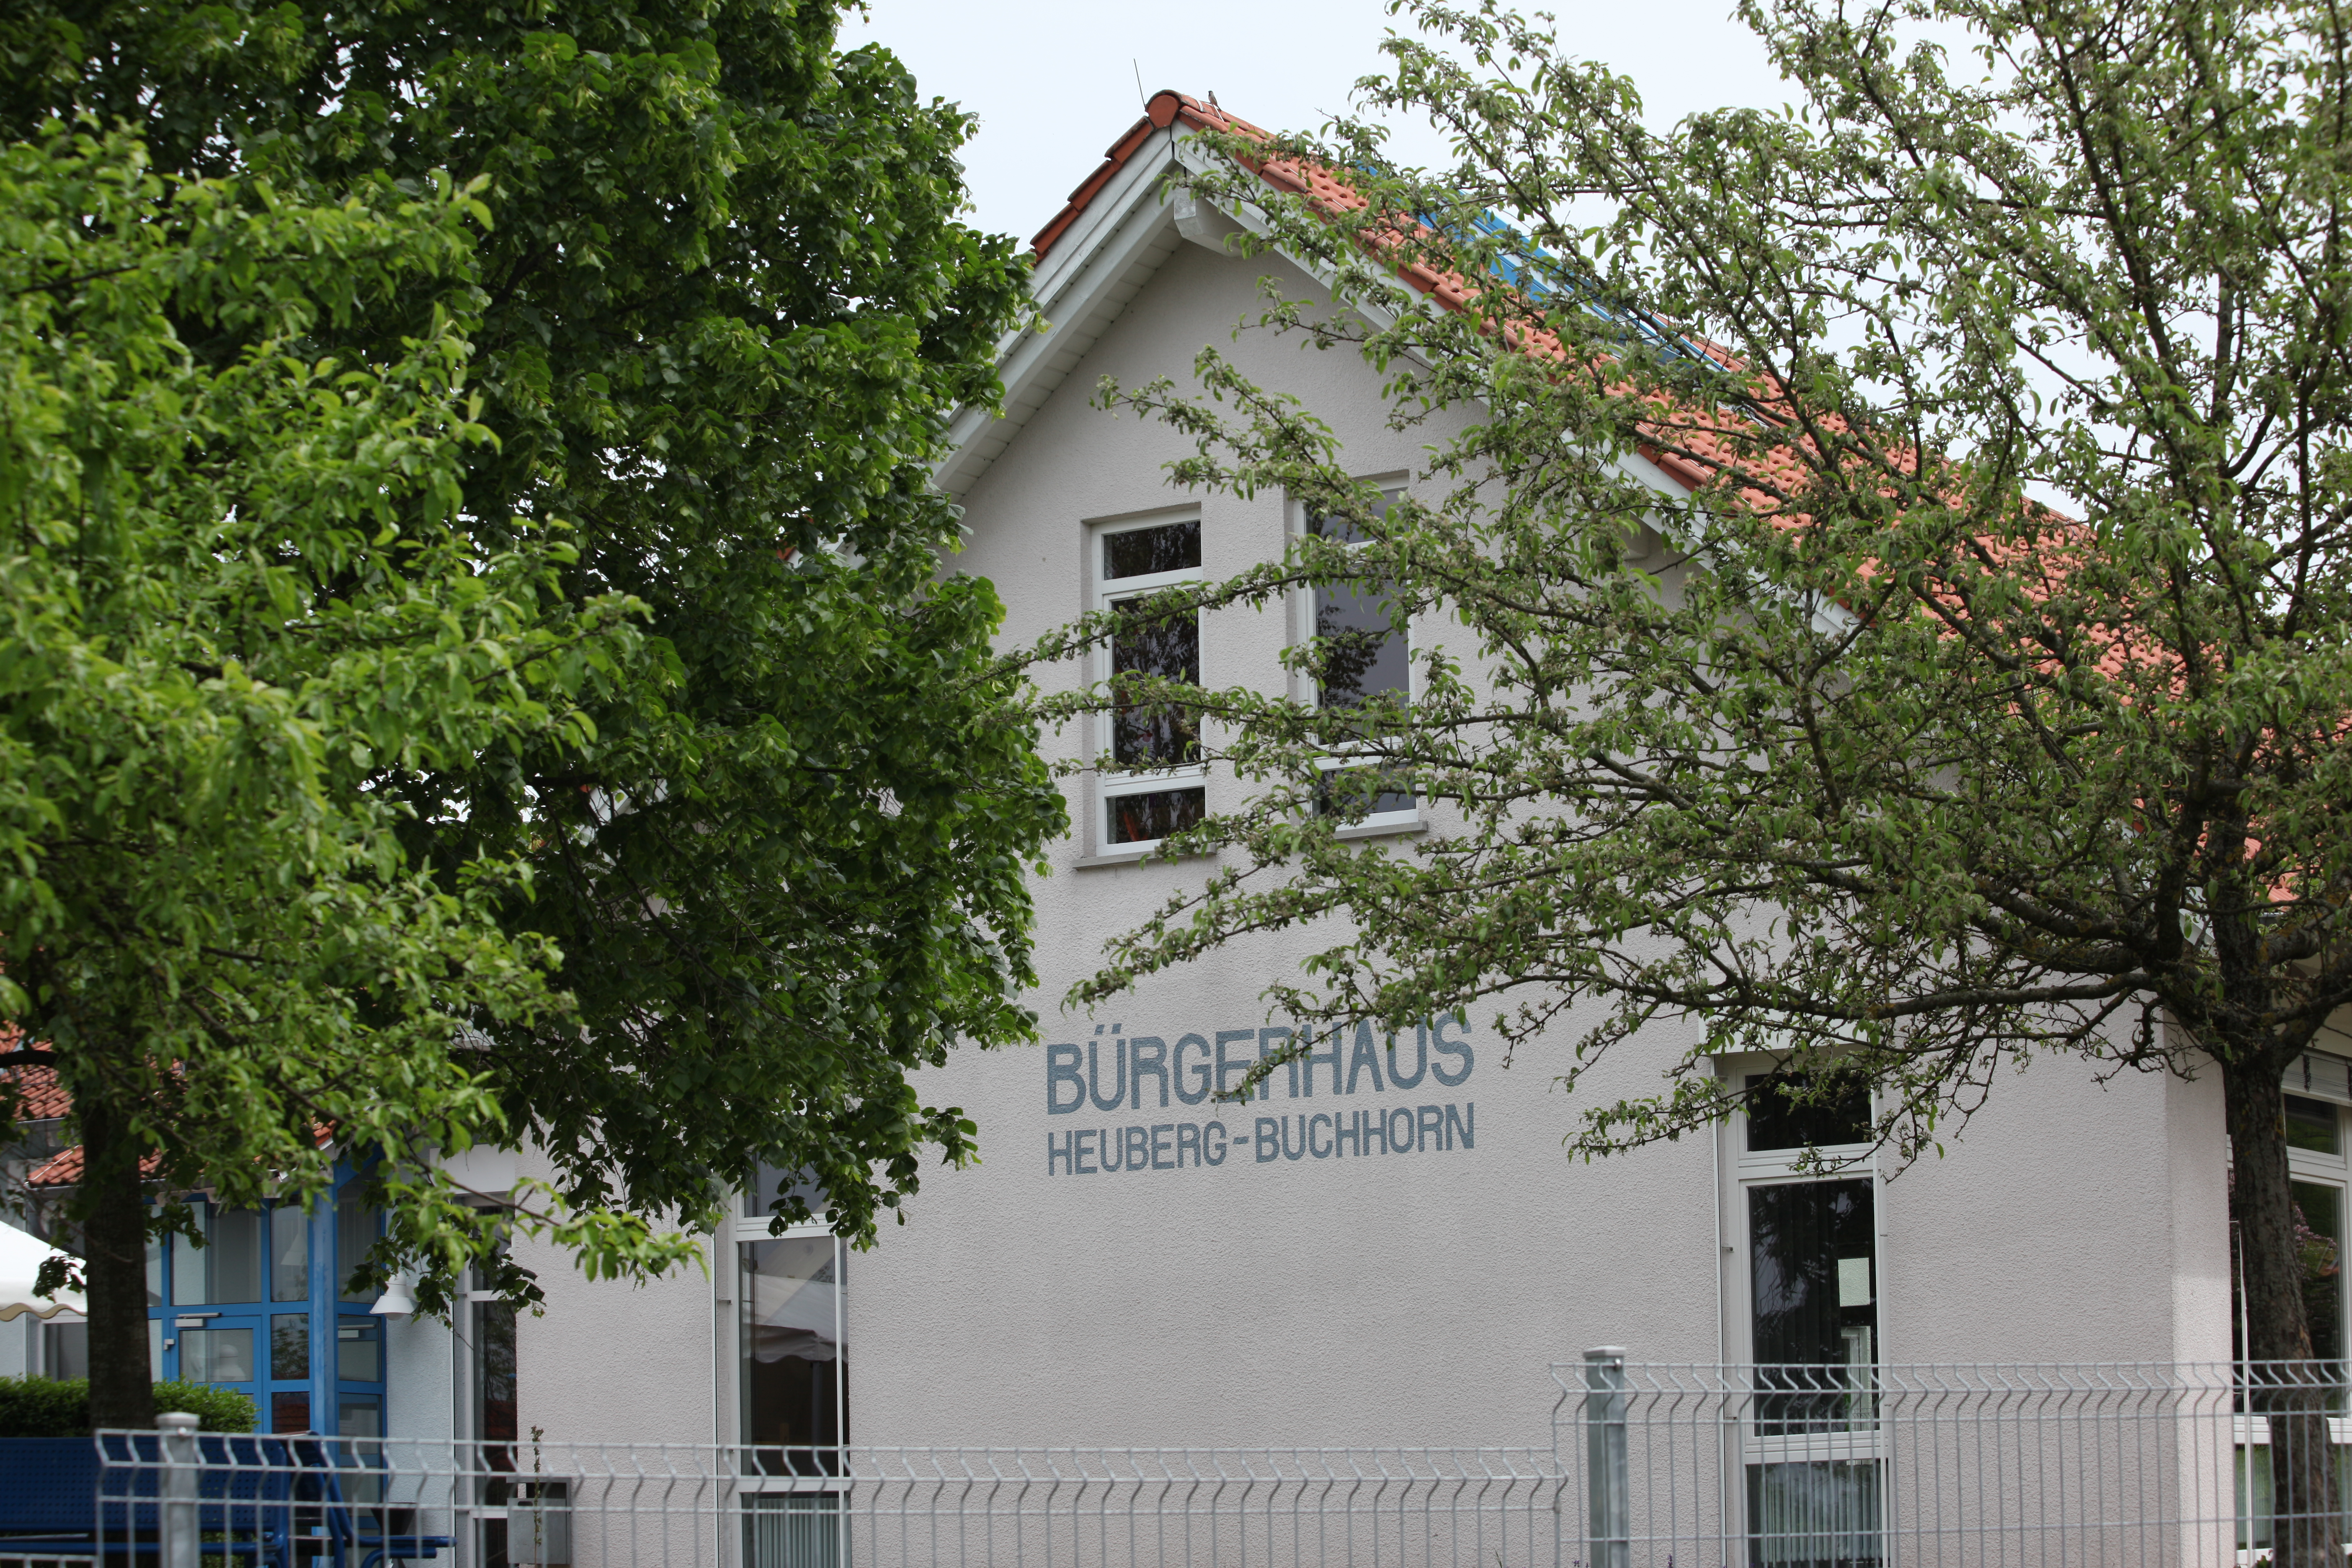                                                     Bürgerhaus Heuberg-Buchhorn                                    